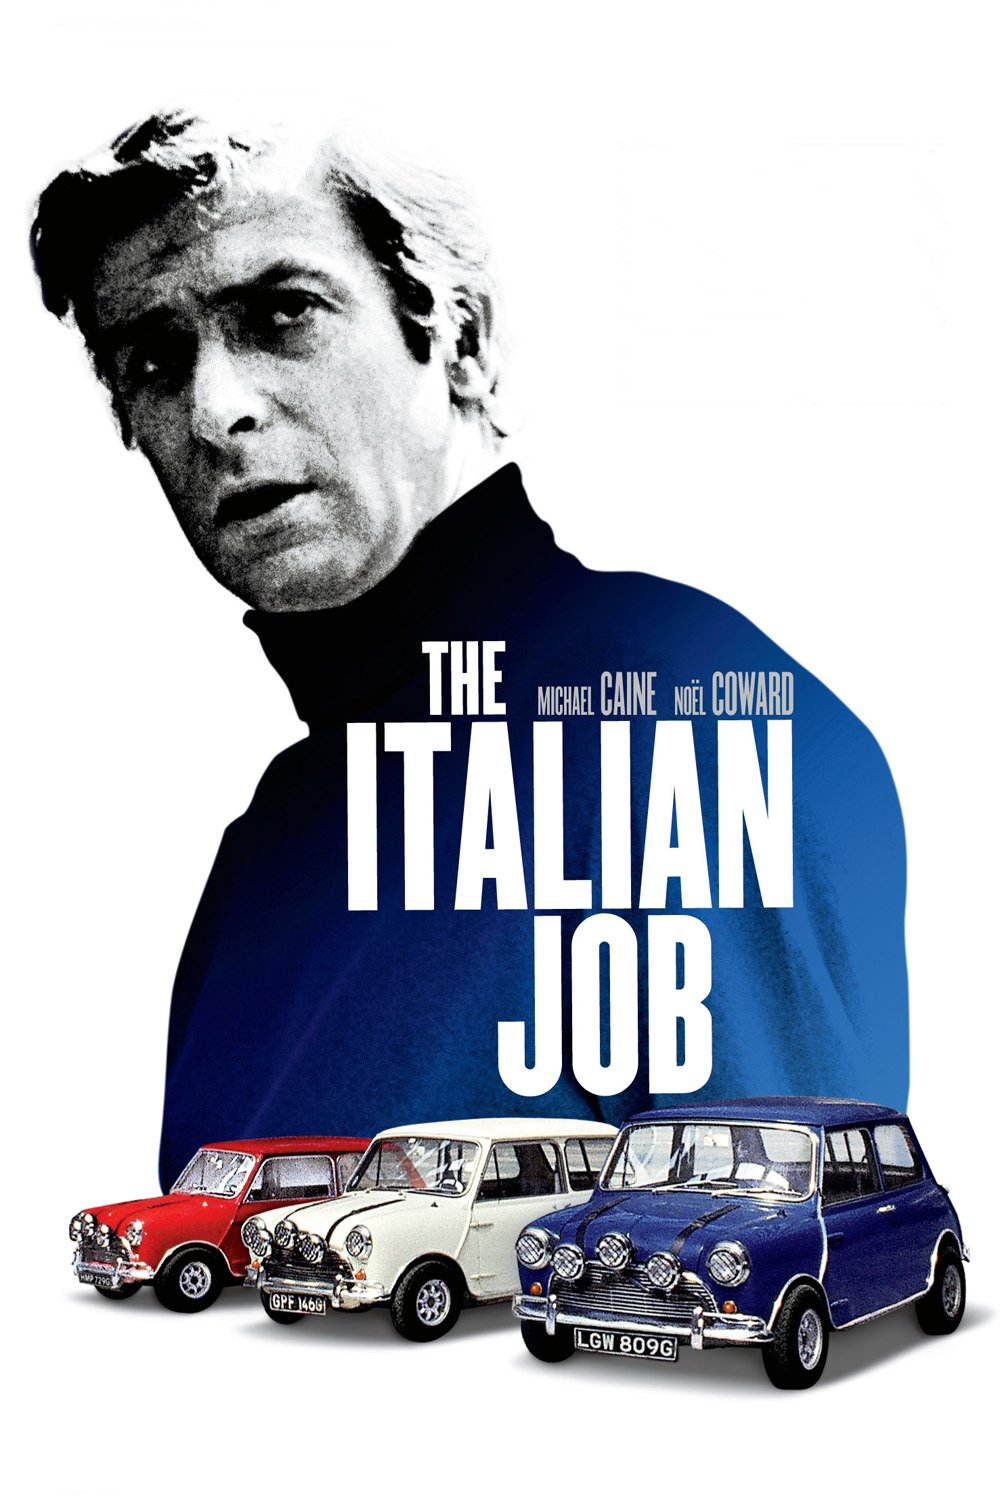 The Italian Job- Best heist movies